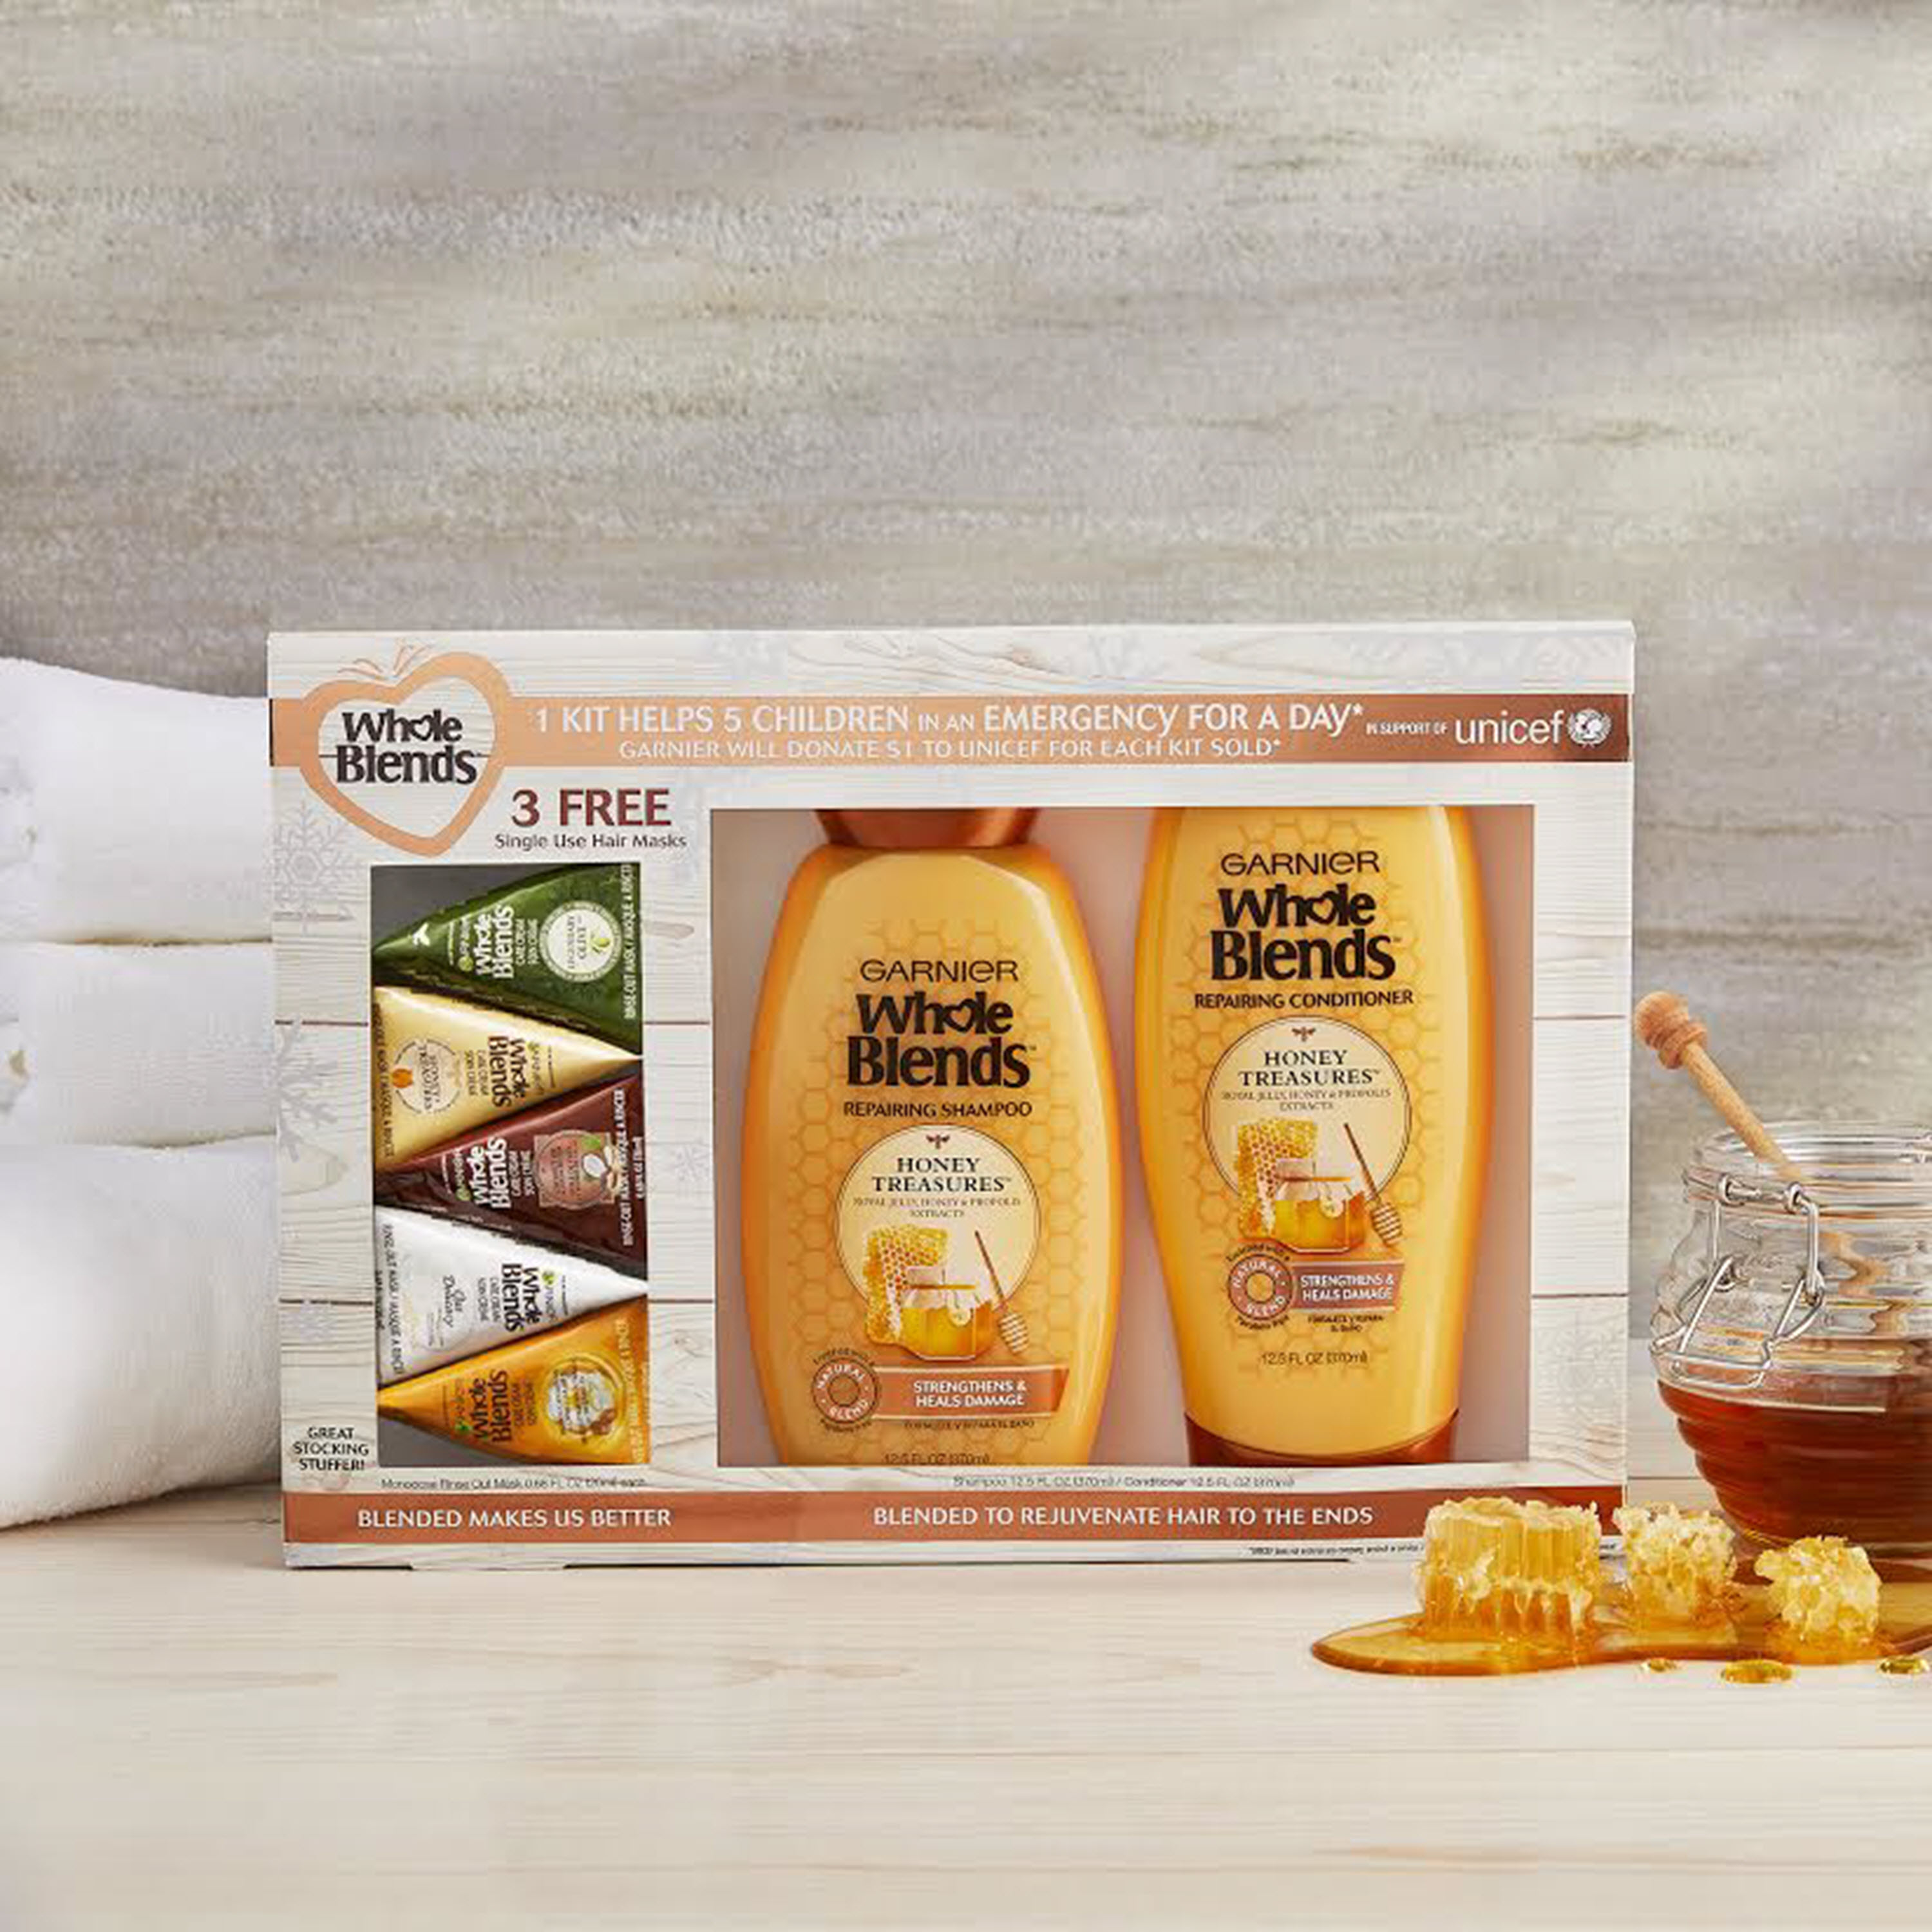 Garnier Whole Blends Honey Treasures Gift Set with 3 Free Hair Masks, 7 Piece Set ($14.29 Value) - image 5 of 6